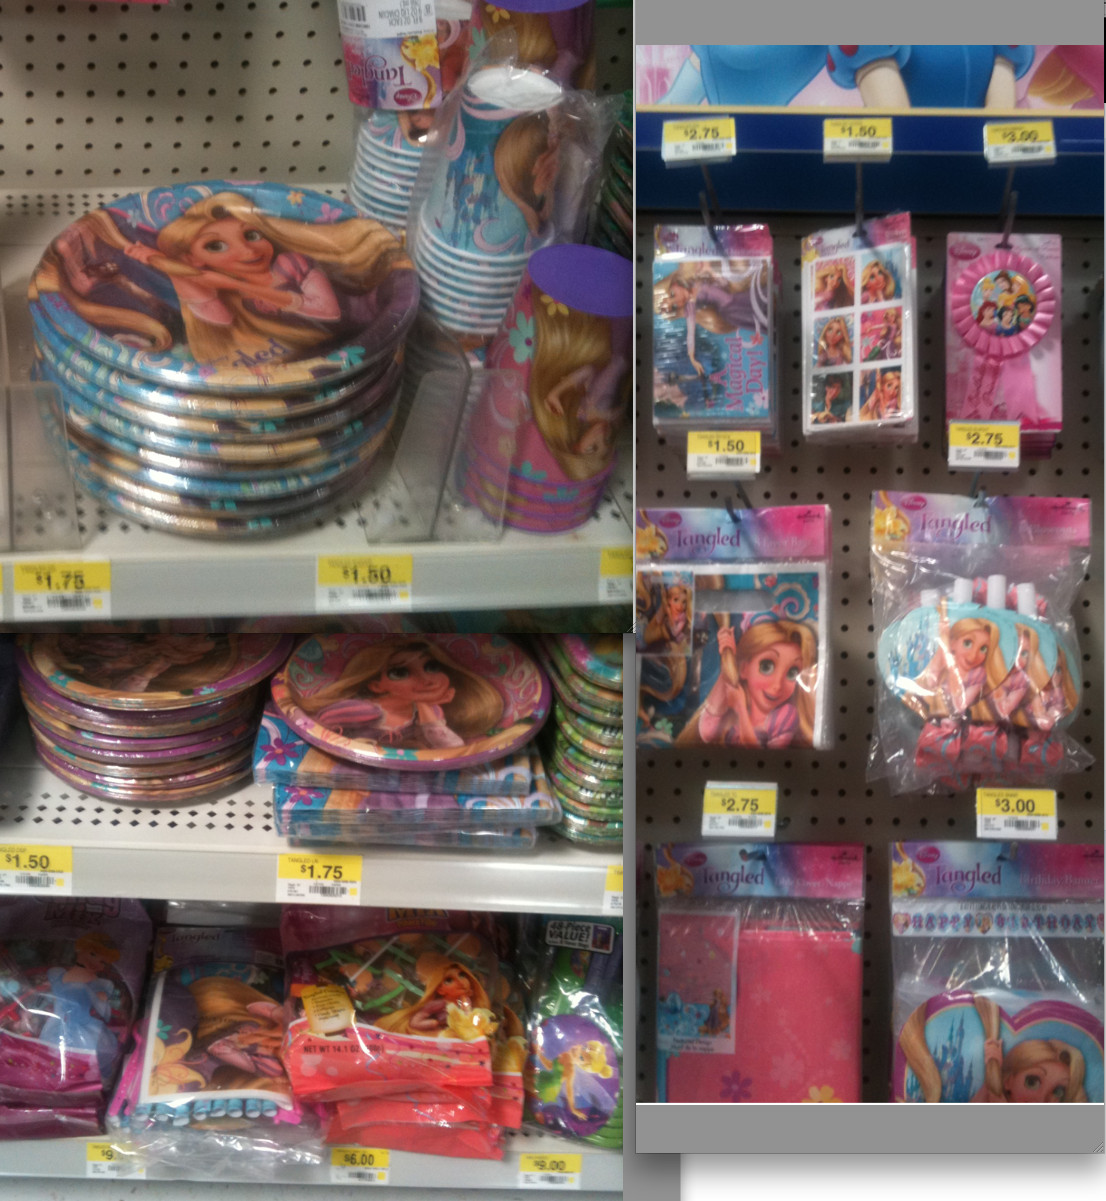 Walmart Birthday Party Decorations
 Tangled Birthday Party Supplies Walmart Price Round up